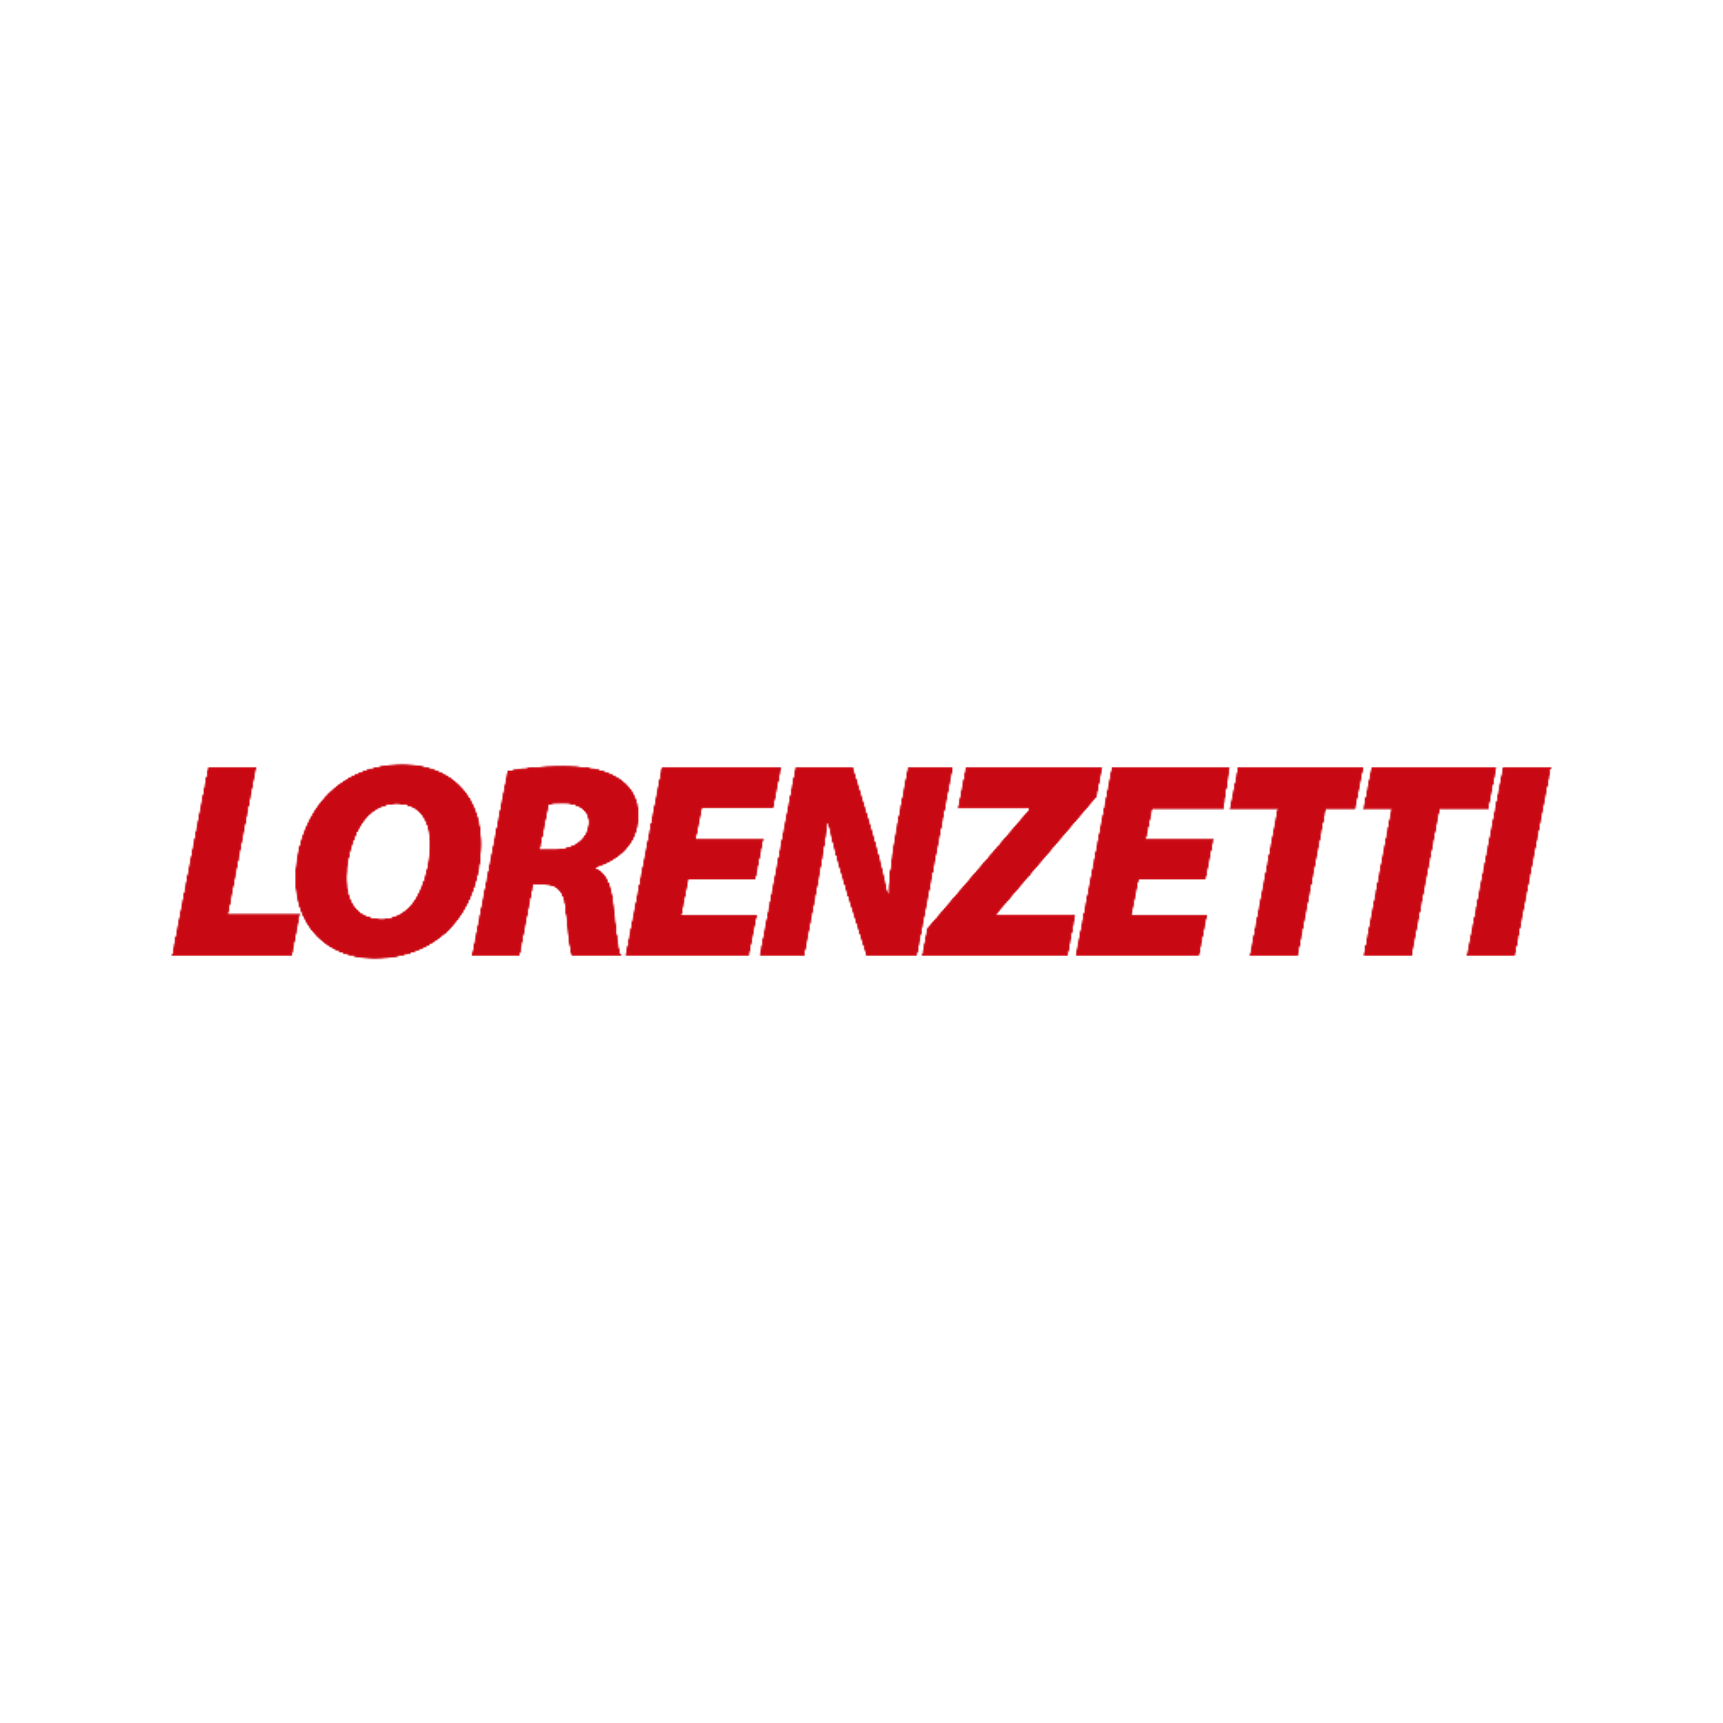 Lorenzetti logo